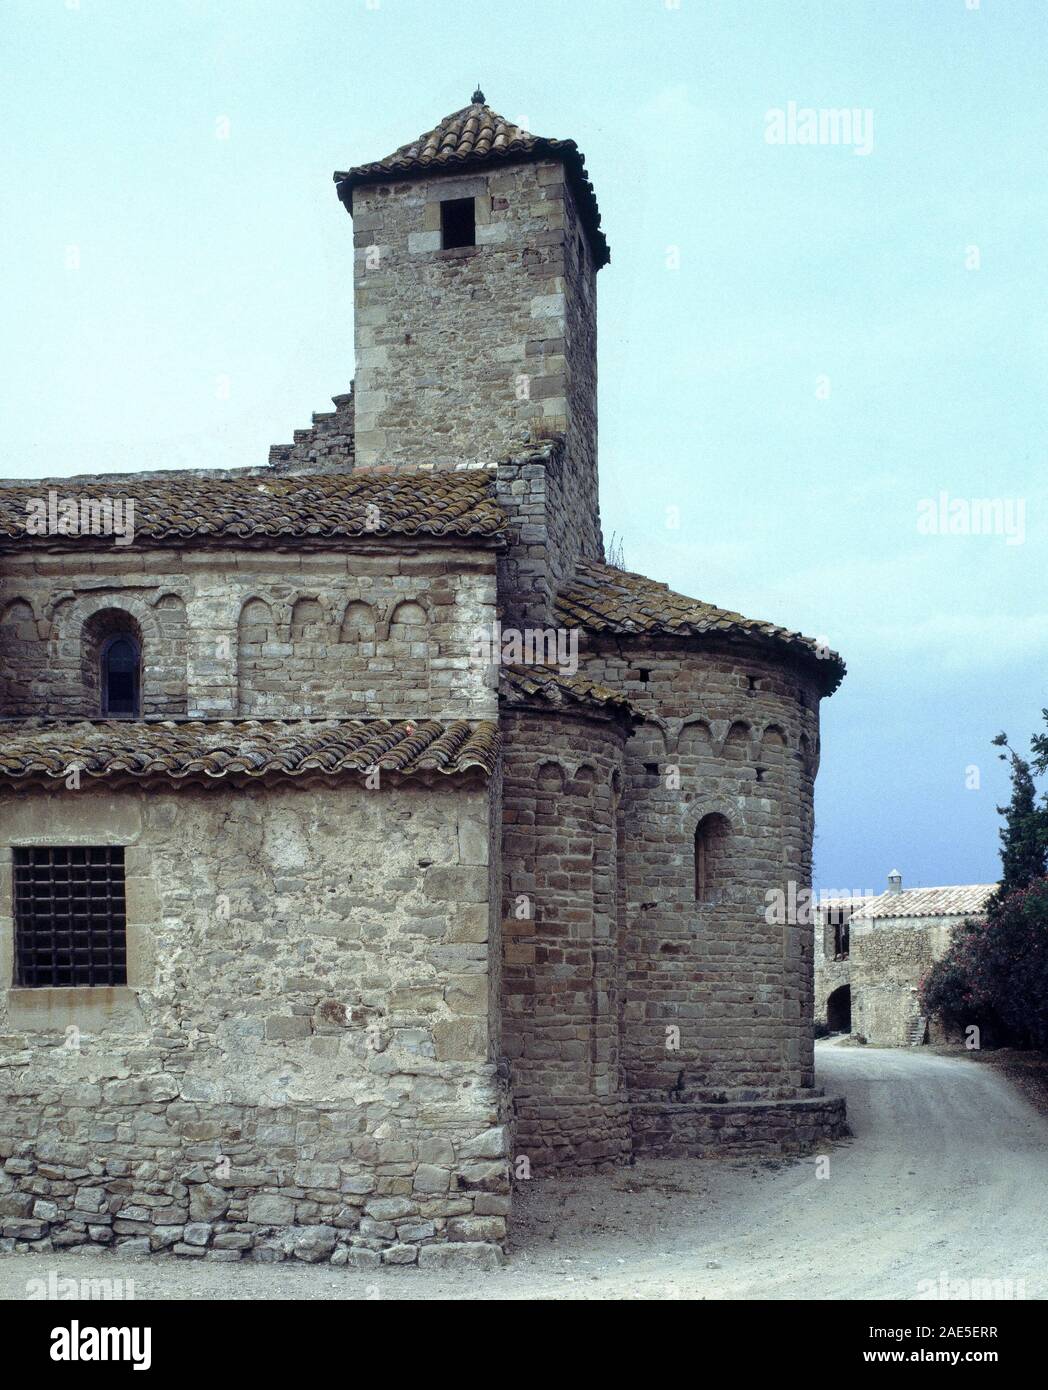 IGLESIA DE SAN PEDRO - SIGLO XI - ROMANICO CATALAN. Location: ST. PETER'S  CHURCH. Ullastret. GERONA. SPAIN Stock Photo - Alamy